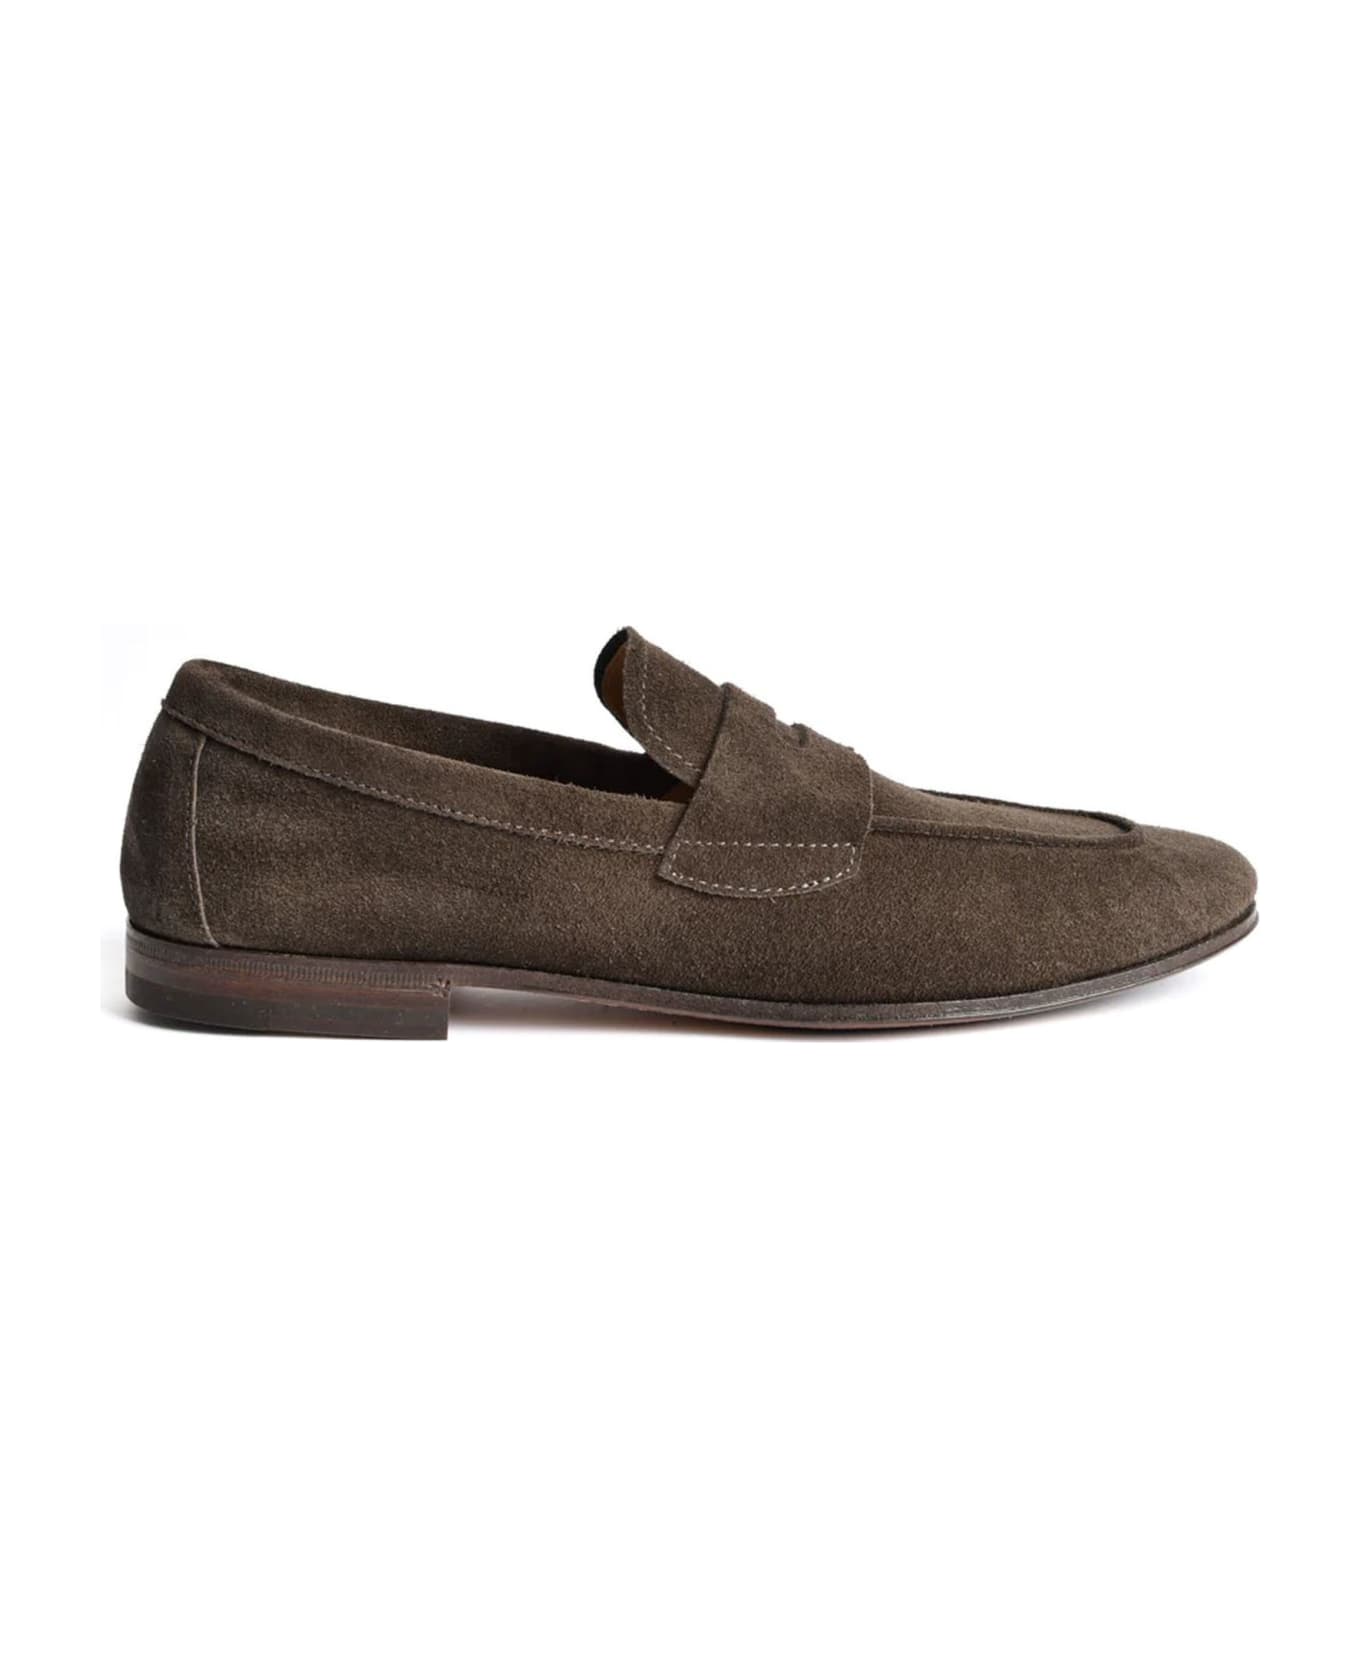 Henderson Baracco Henderson Flat Shoes Brown - Brown